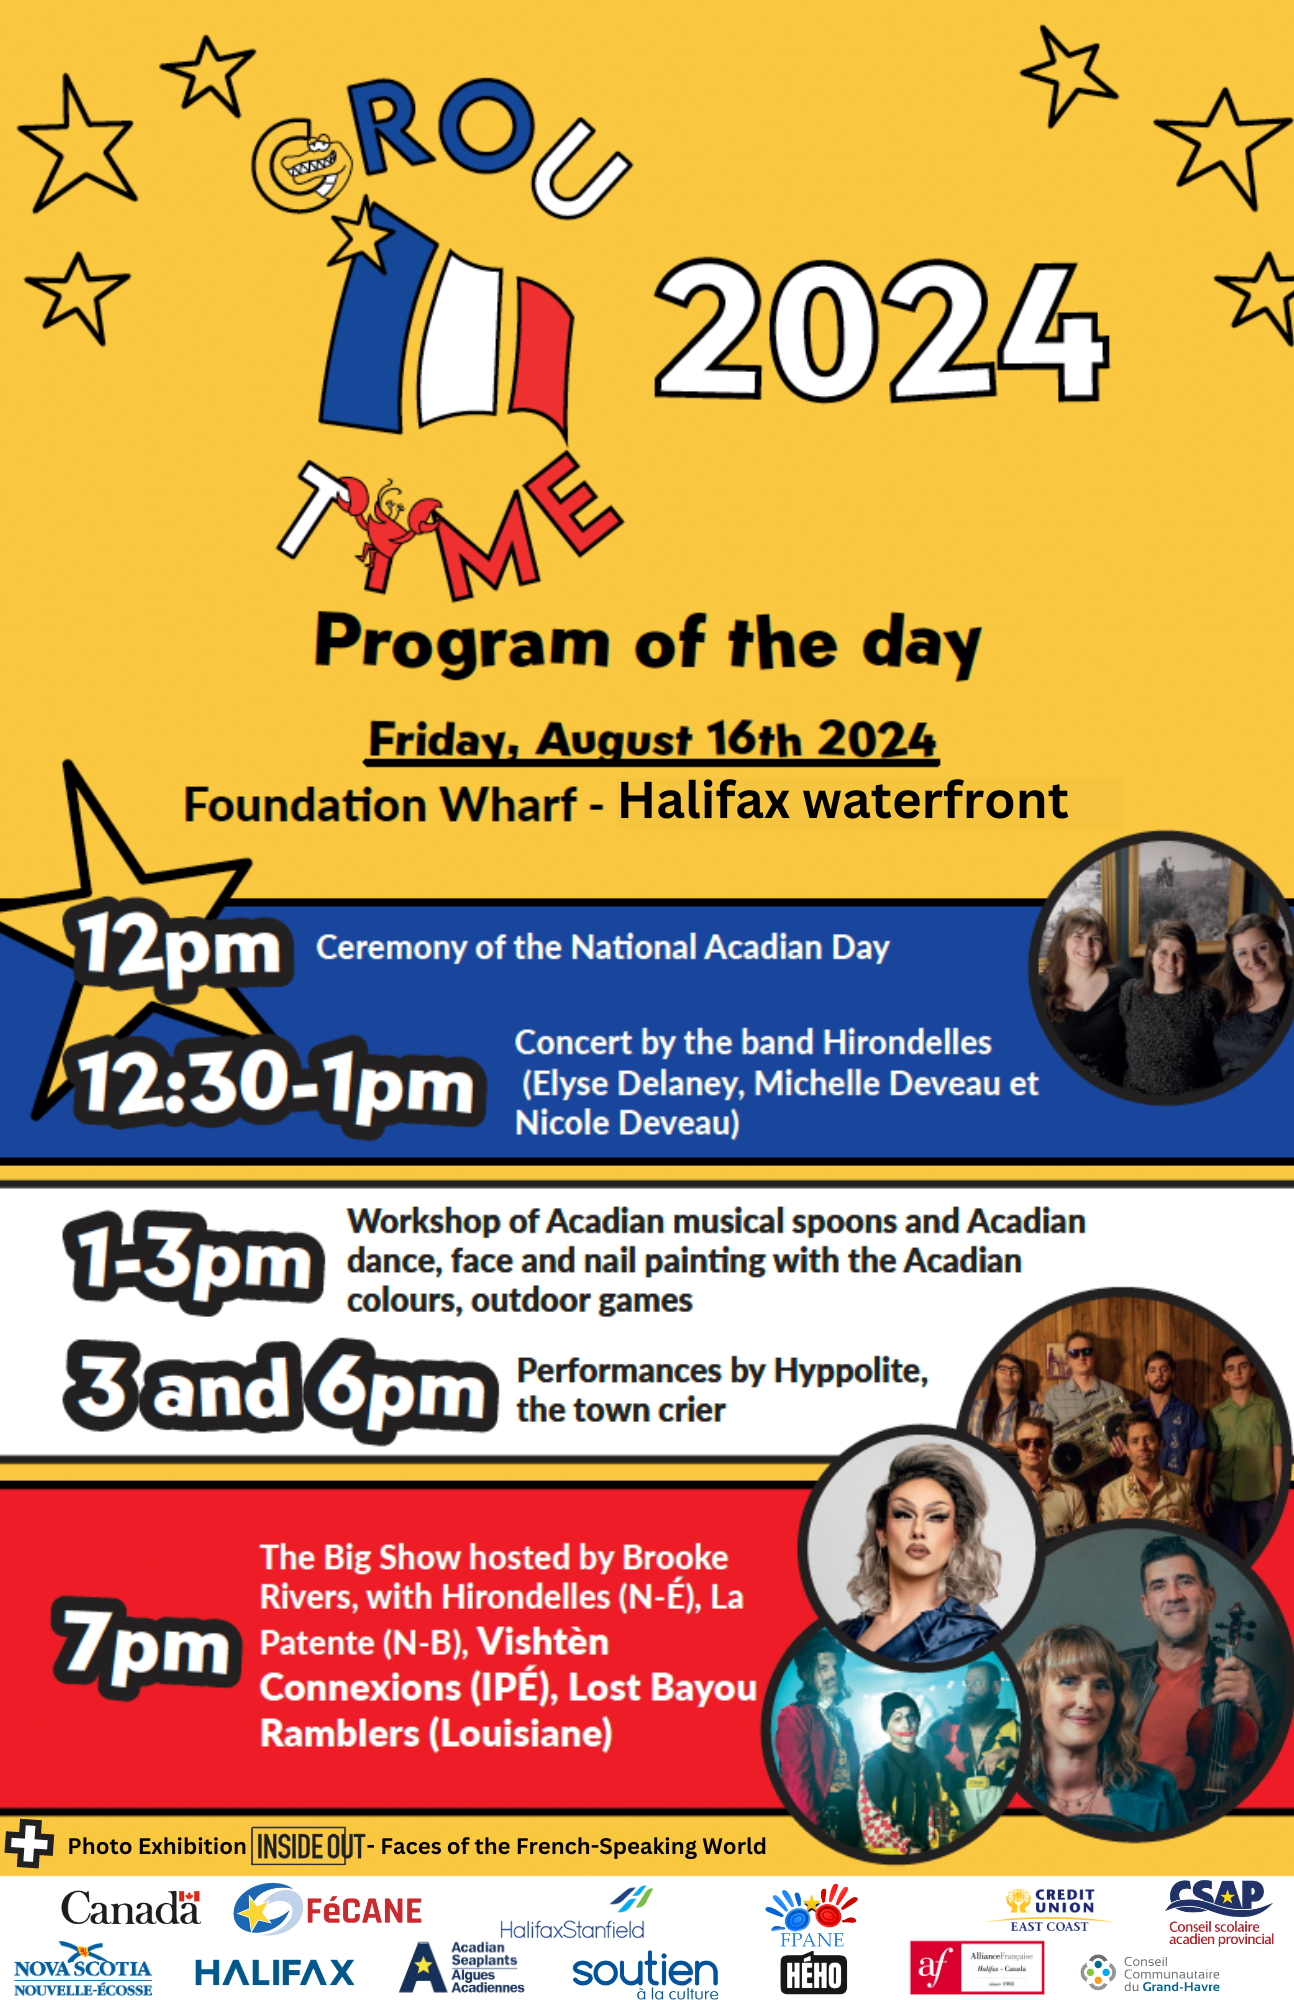 Program of Grou Tyme 2024 in Halifax